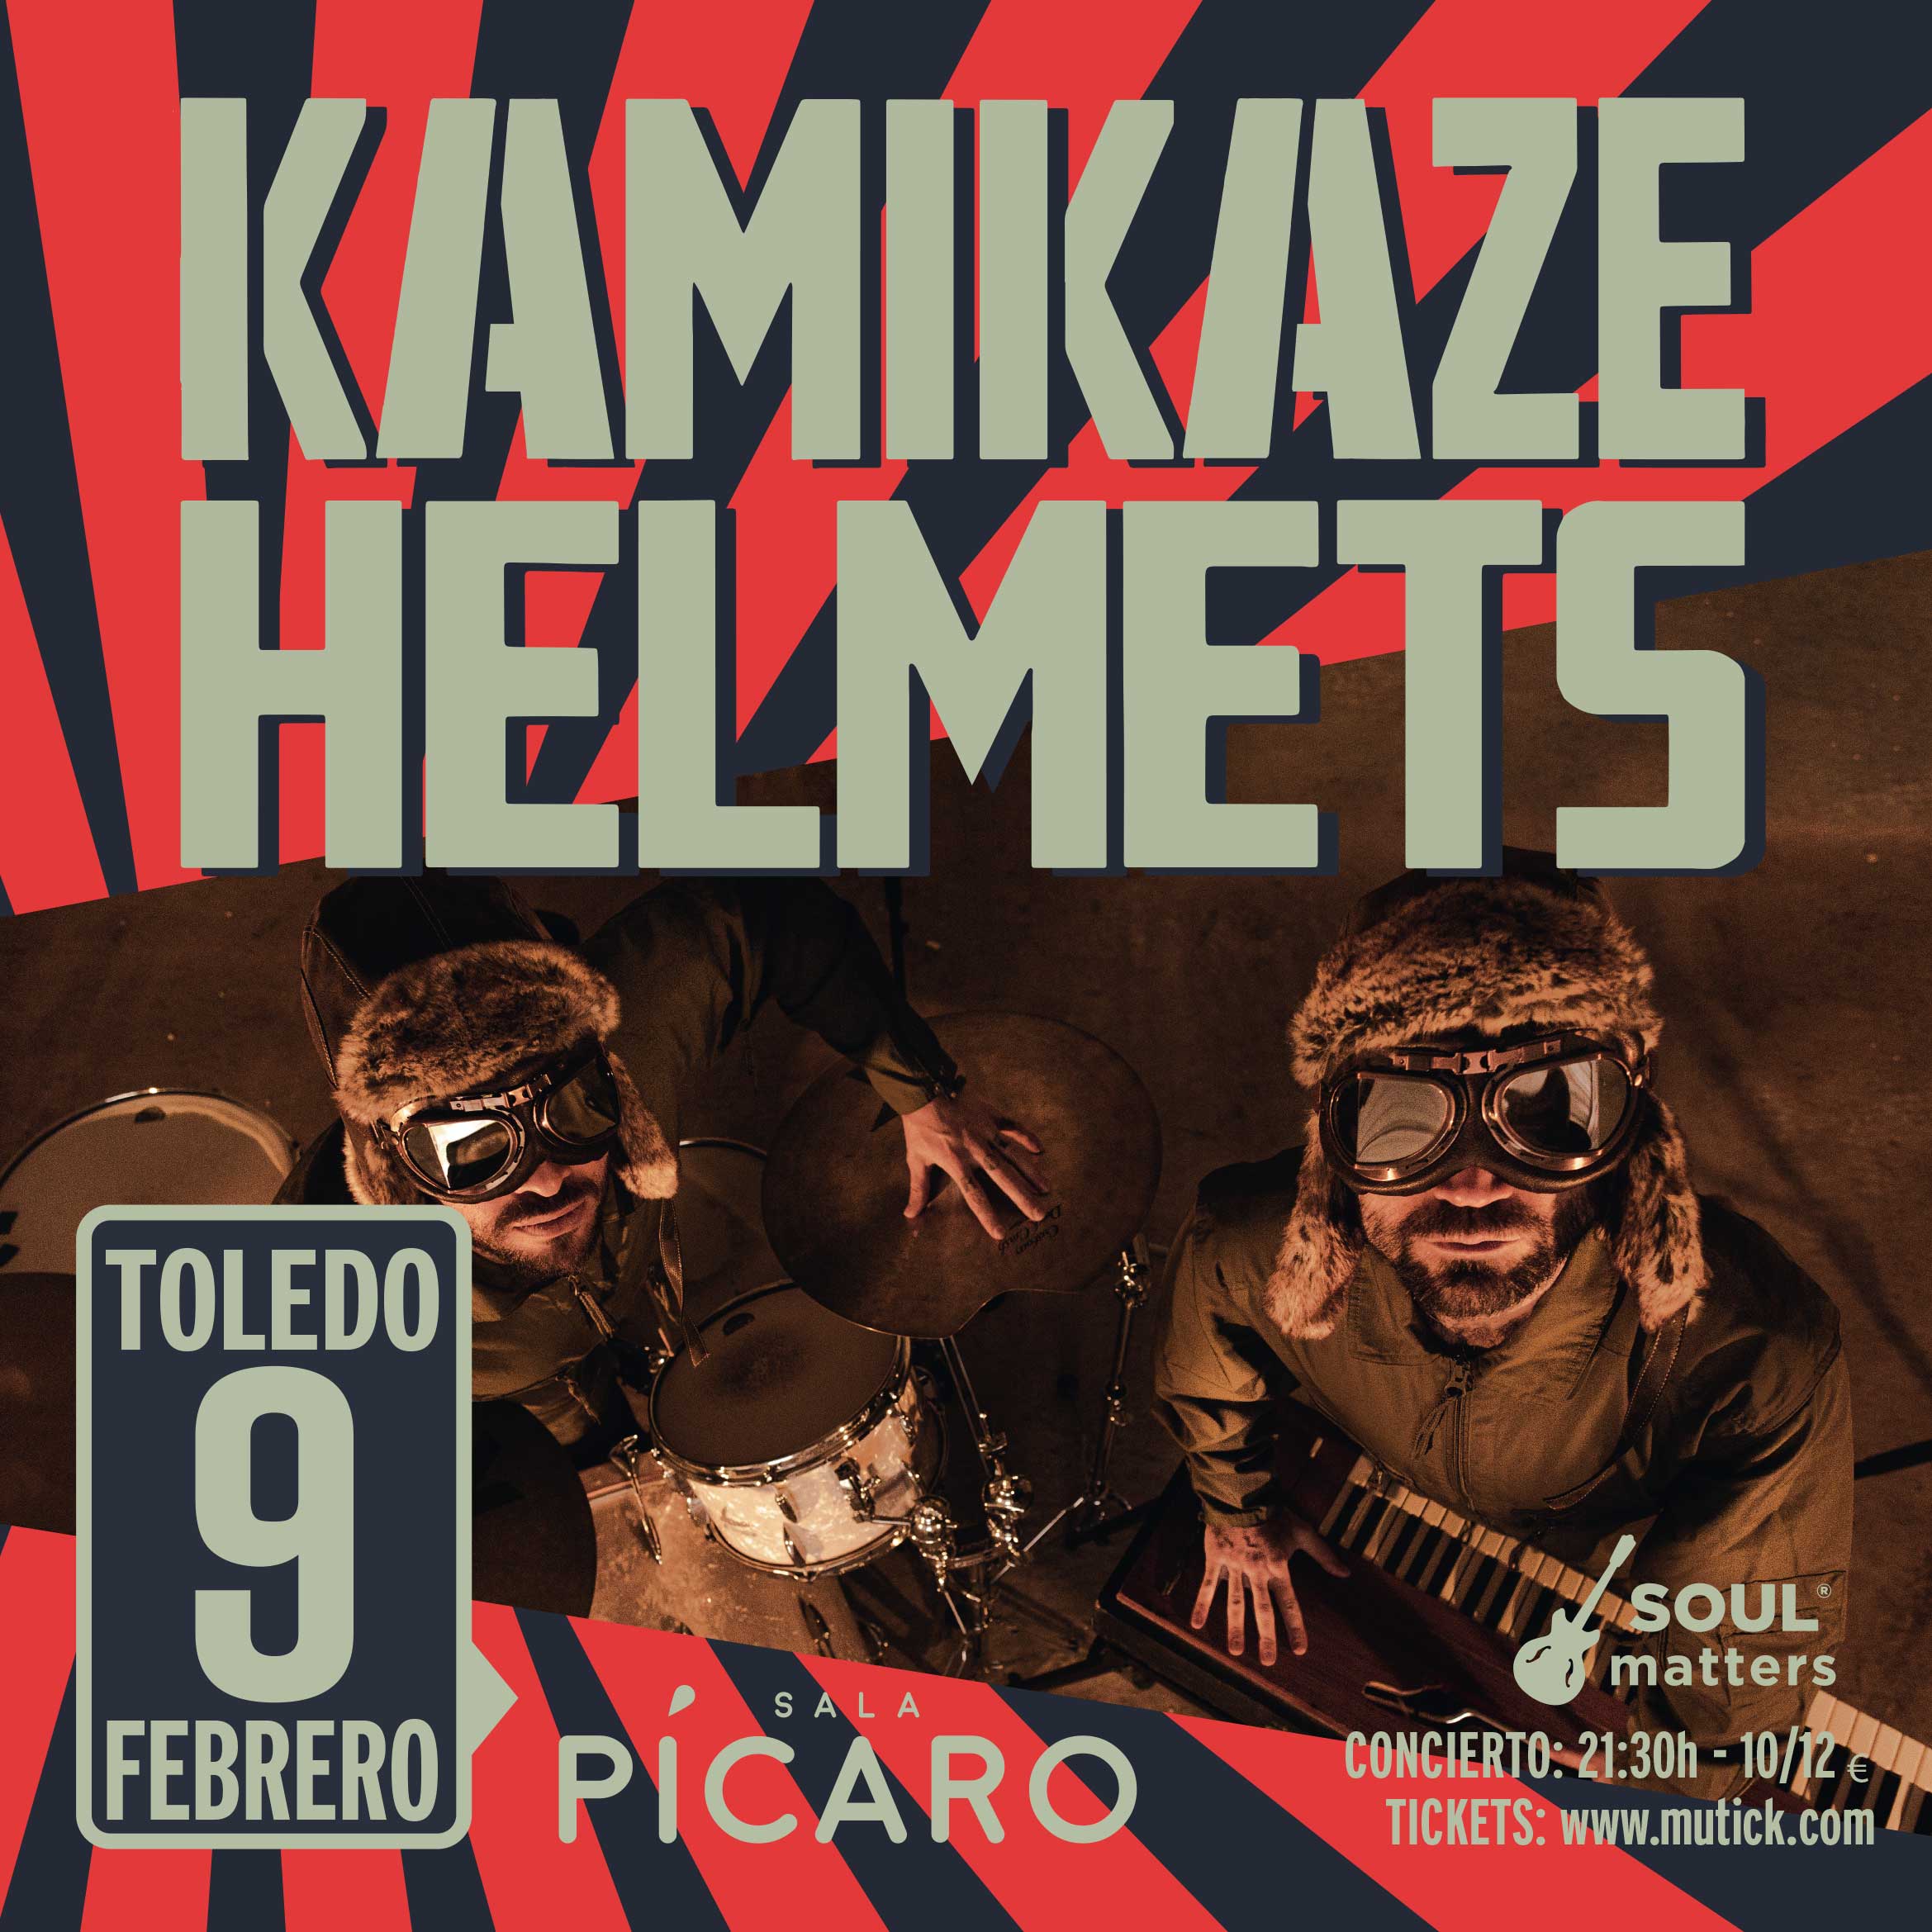 kamikaze helmets